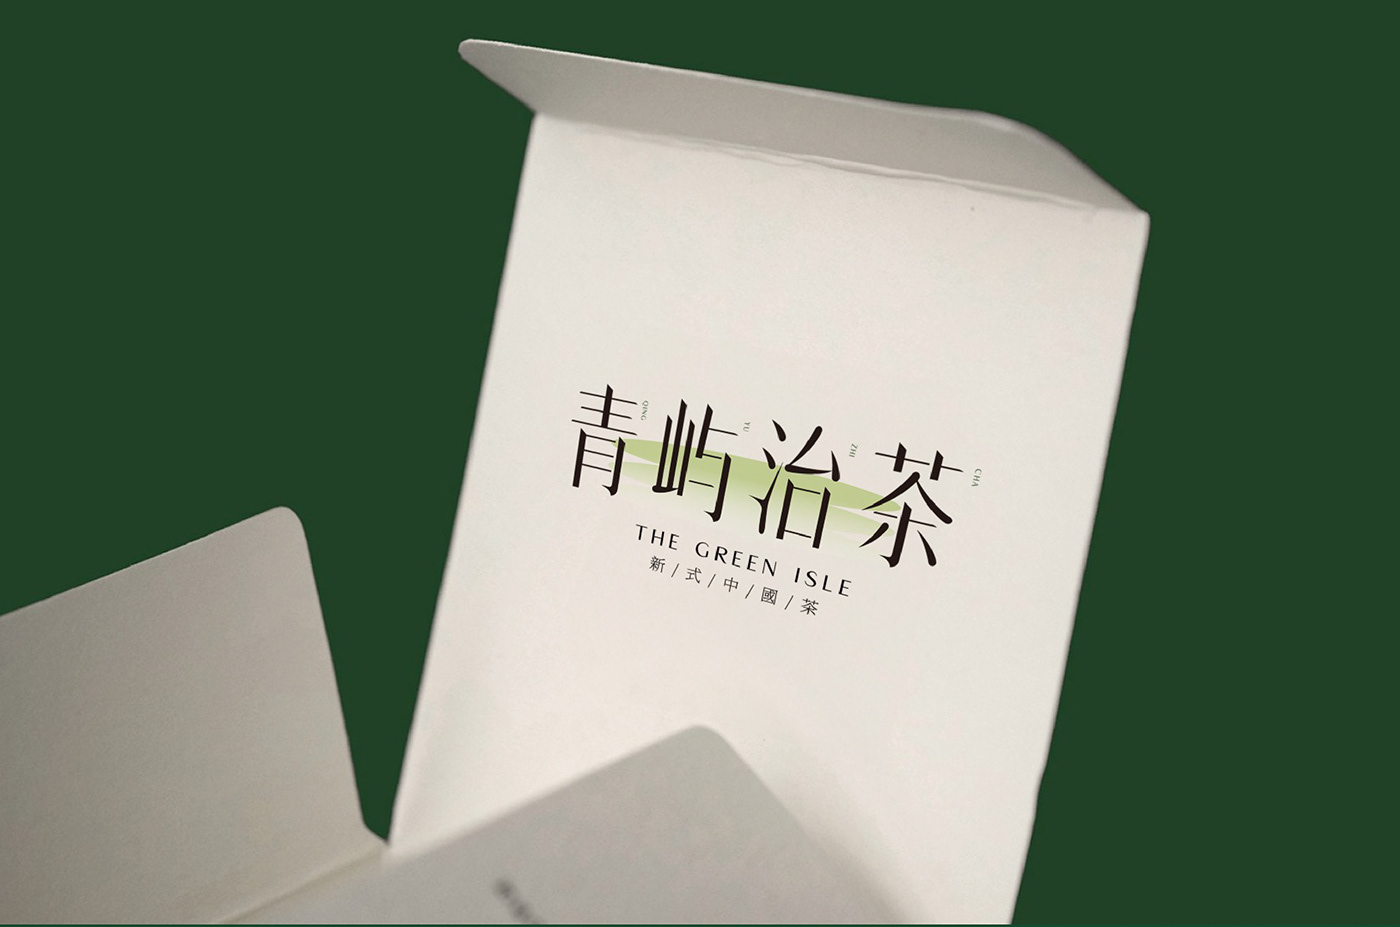 adobe illustrator Brand Design logo adobephotoshop package chinese Logotype drink beverage tea